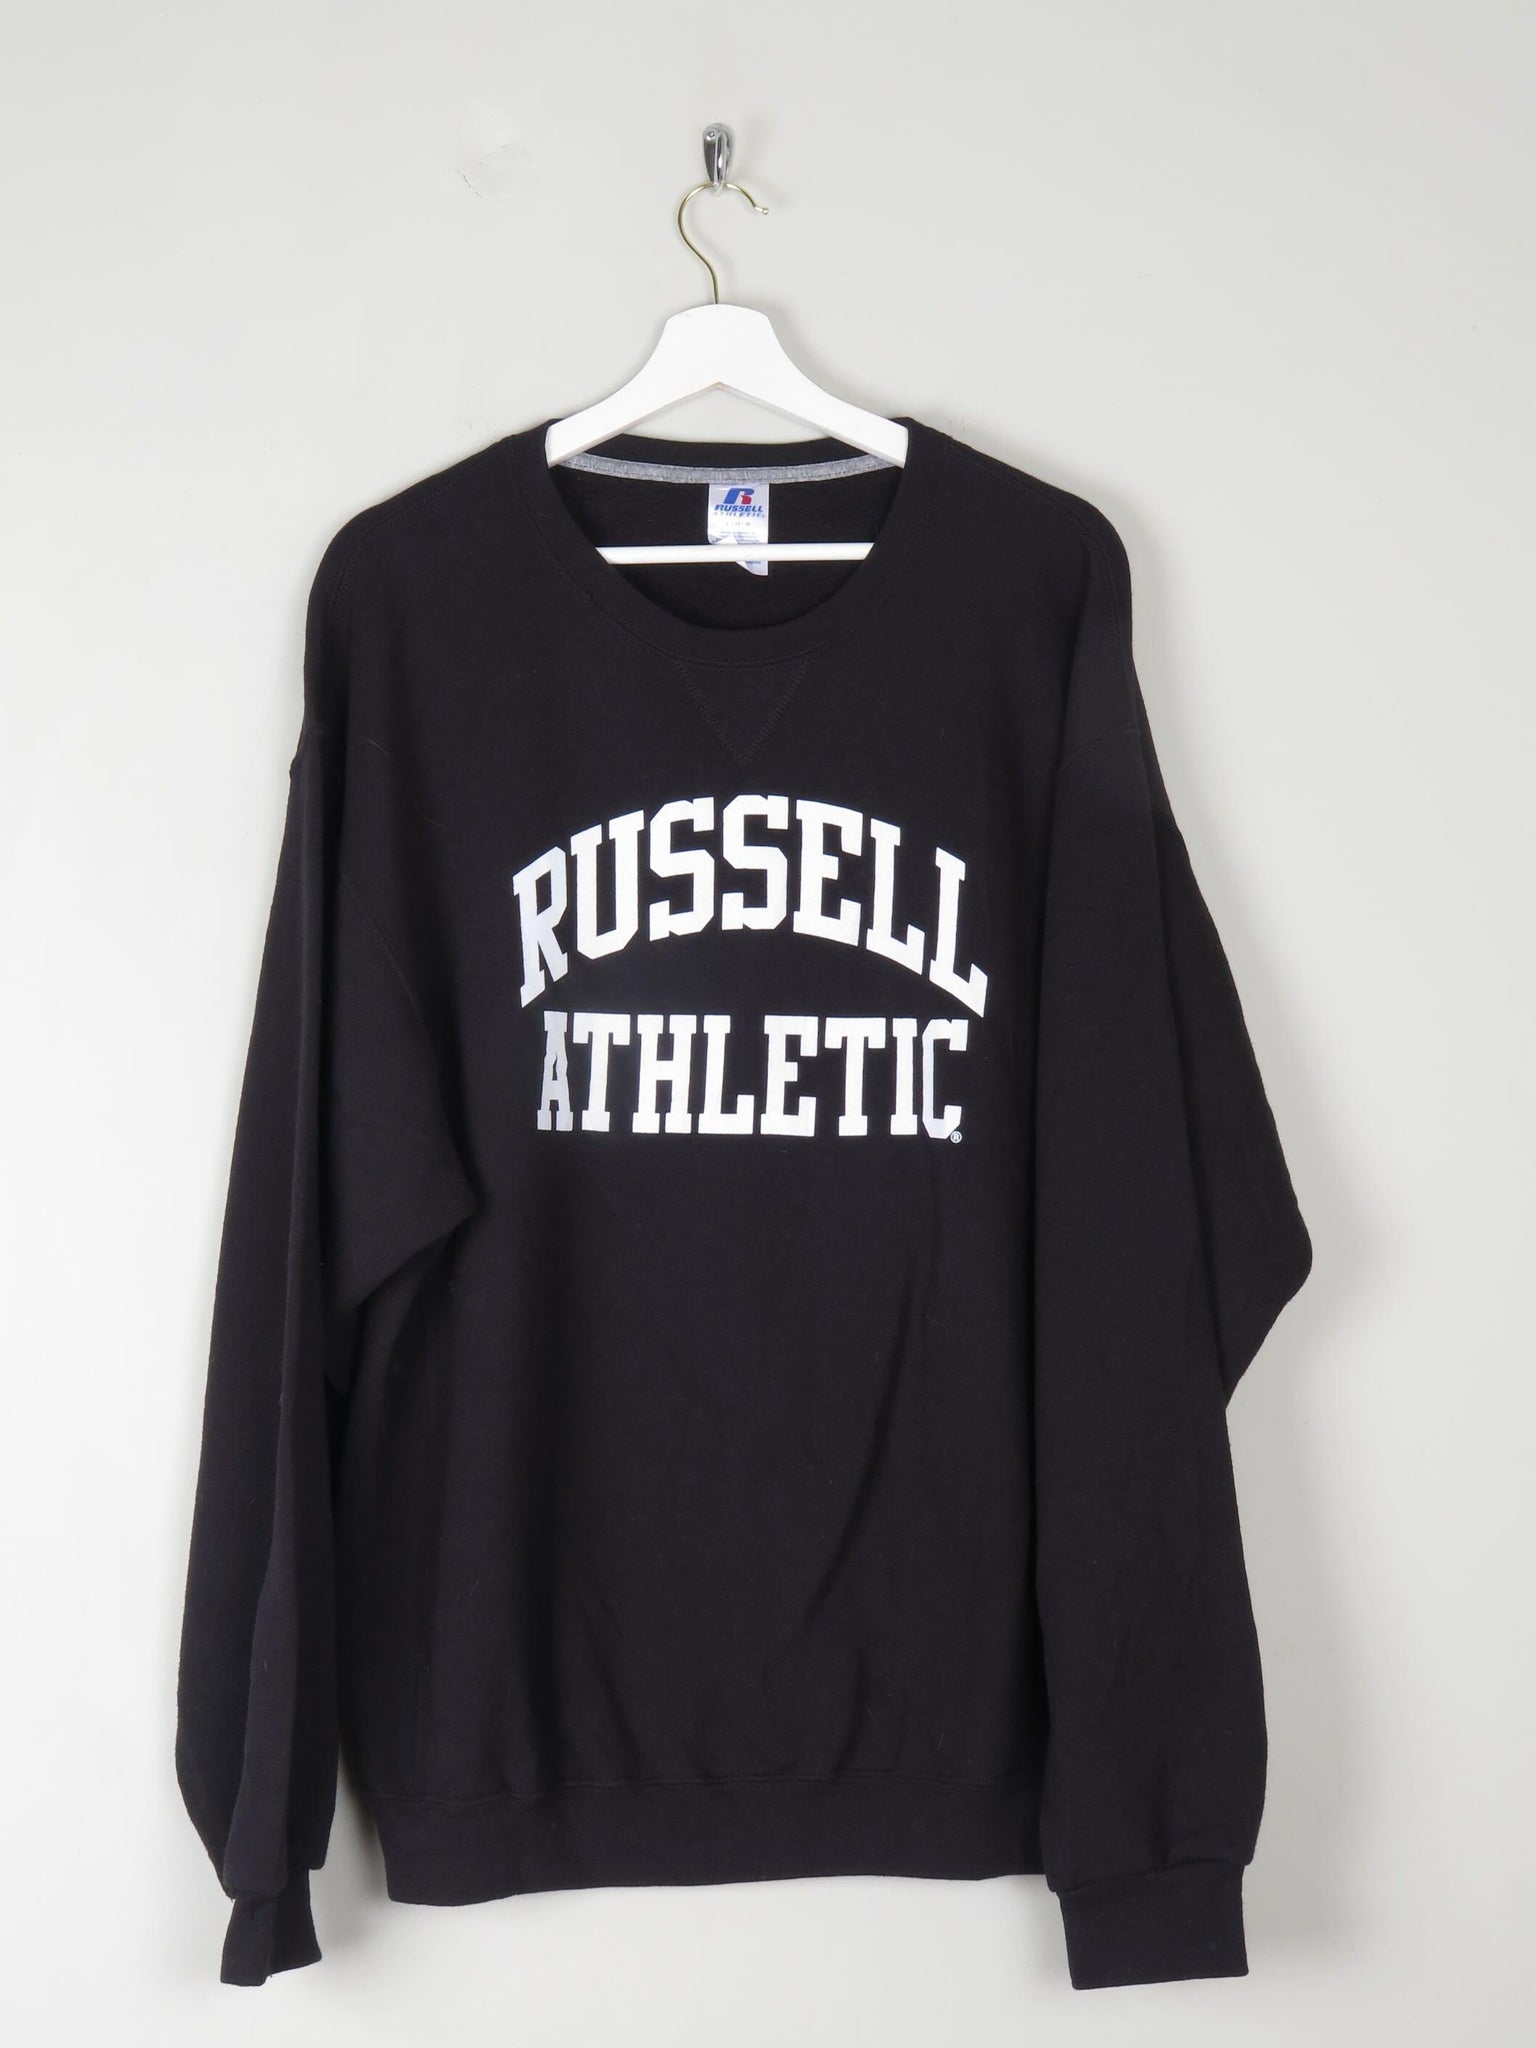 Men's Black Russell Athletic Vintage Sweatshirt L - The Harlequin